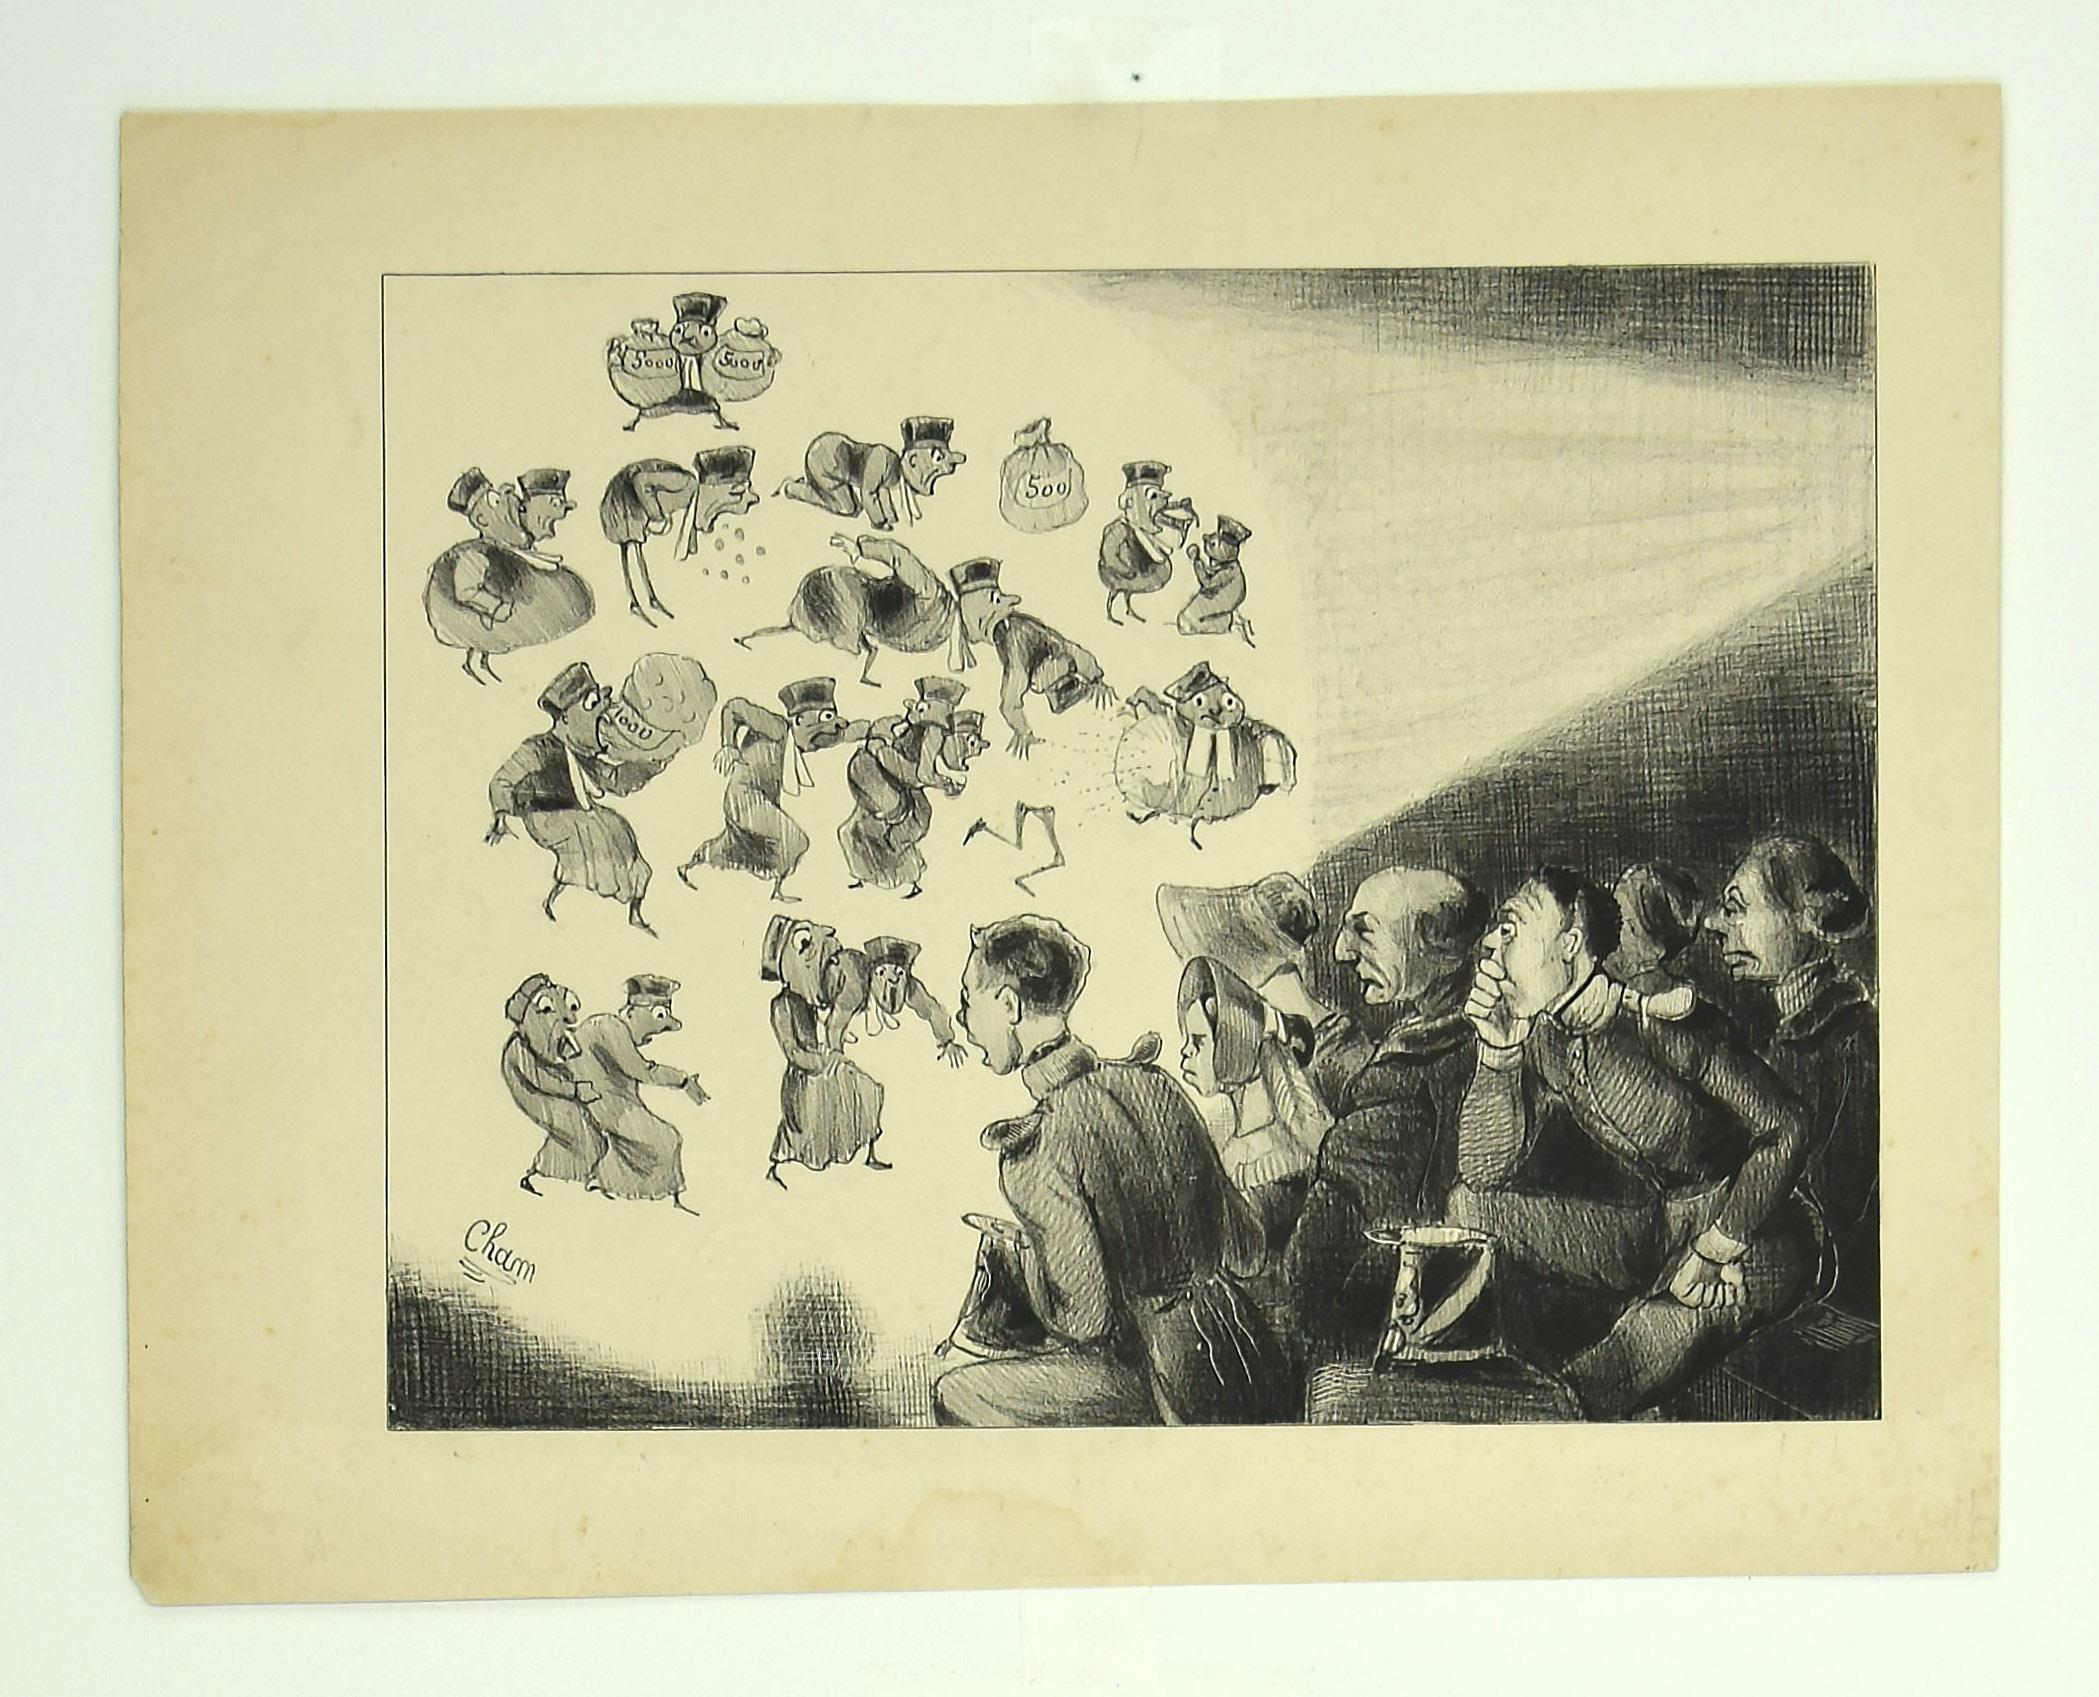 Silente Cinema - Original Lithograph by Cham - Mid-19th Century - Print by Charles Amedee de Noe (CHAM)